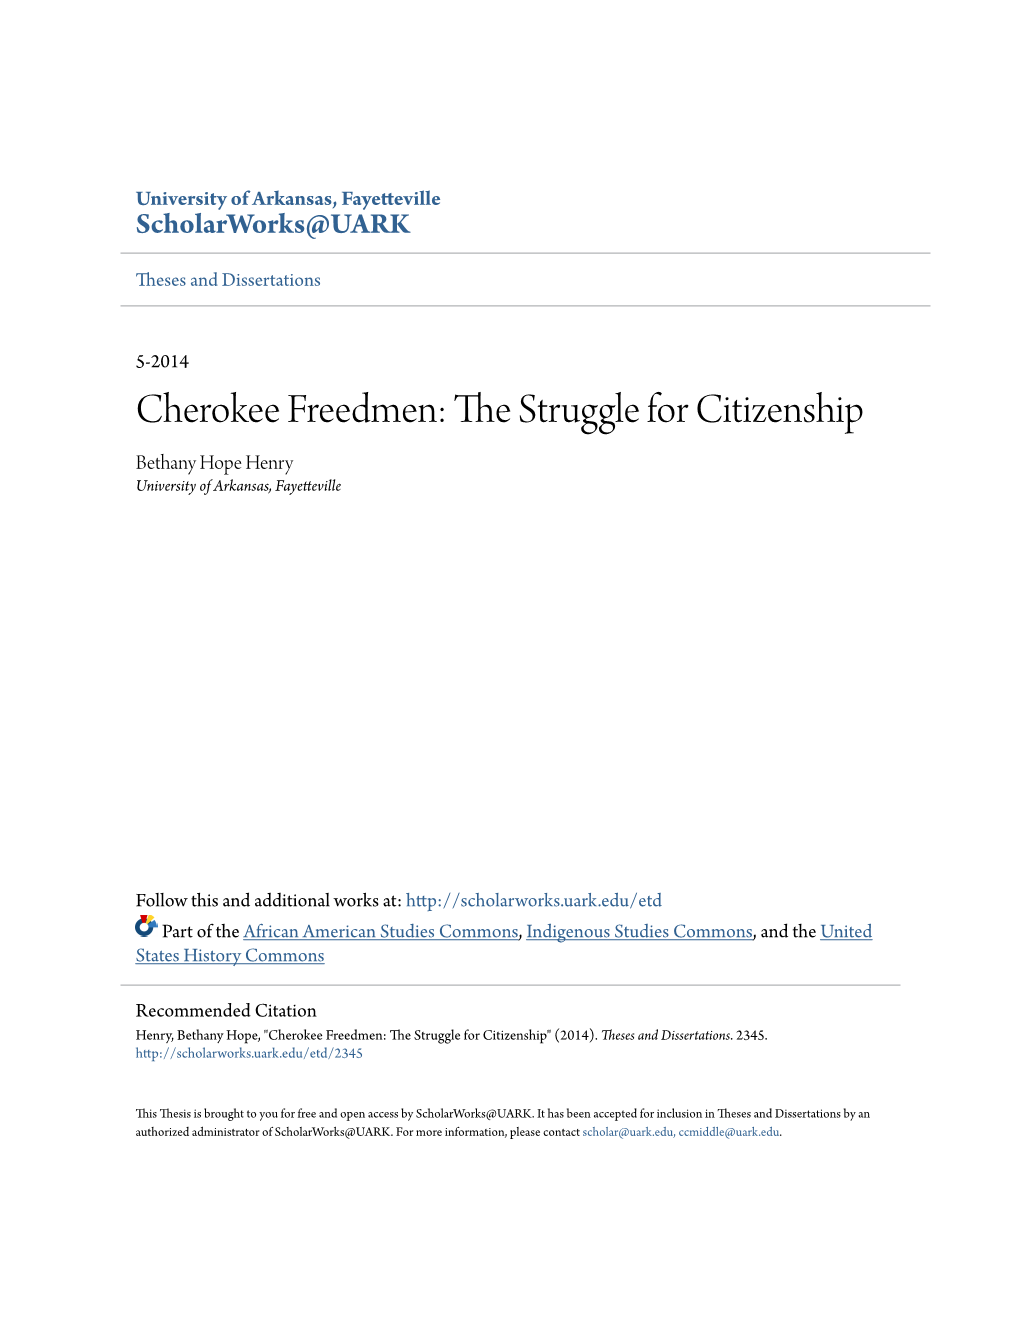 Cherokee Freedmen: the Struggle for Citizenship